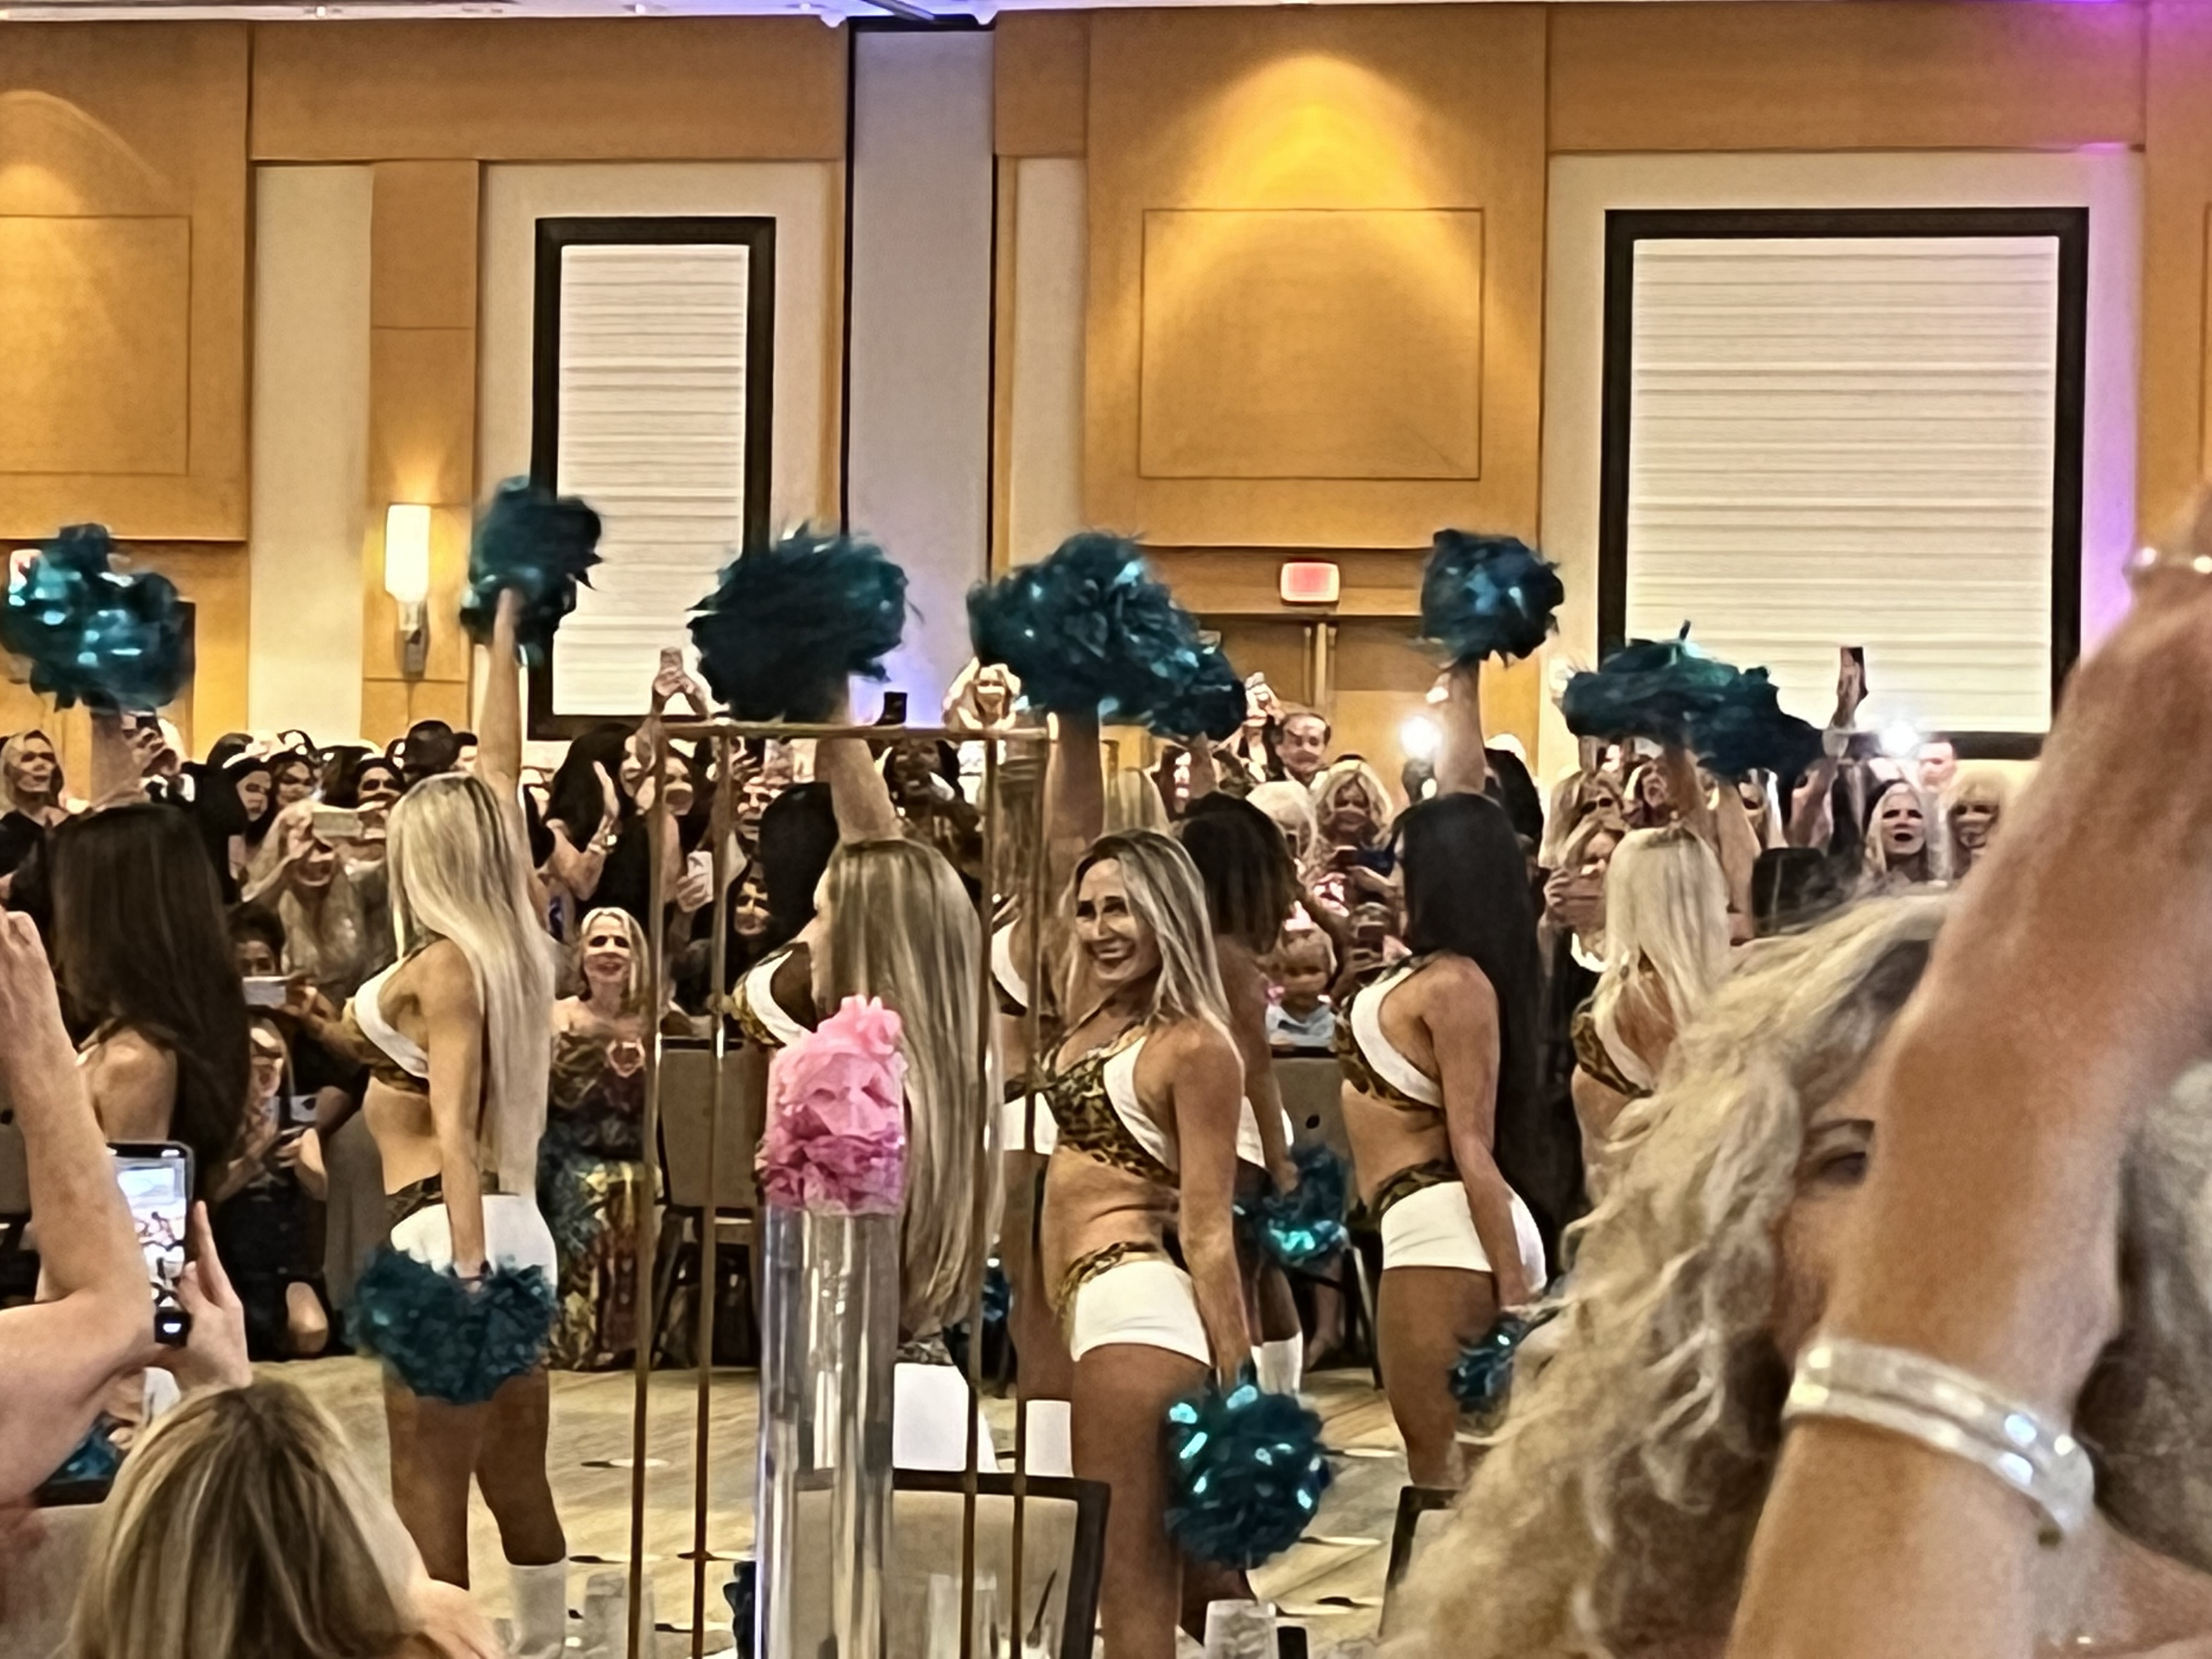 The Jacksonville Jaguar Cheerleaders perform at the National Football Cheerleaders Alumni Organization Conference Gala